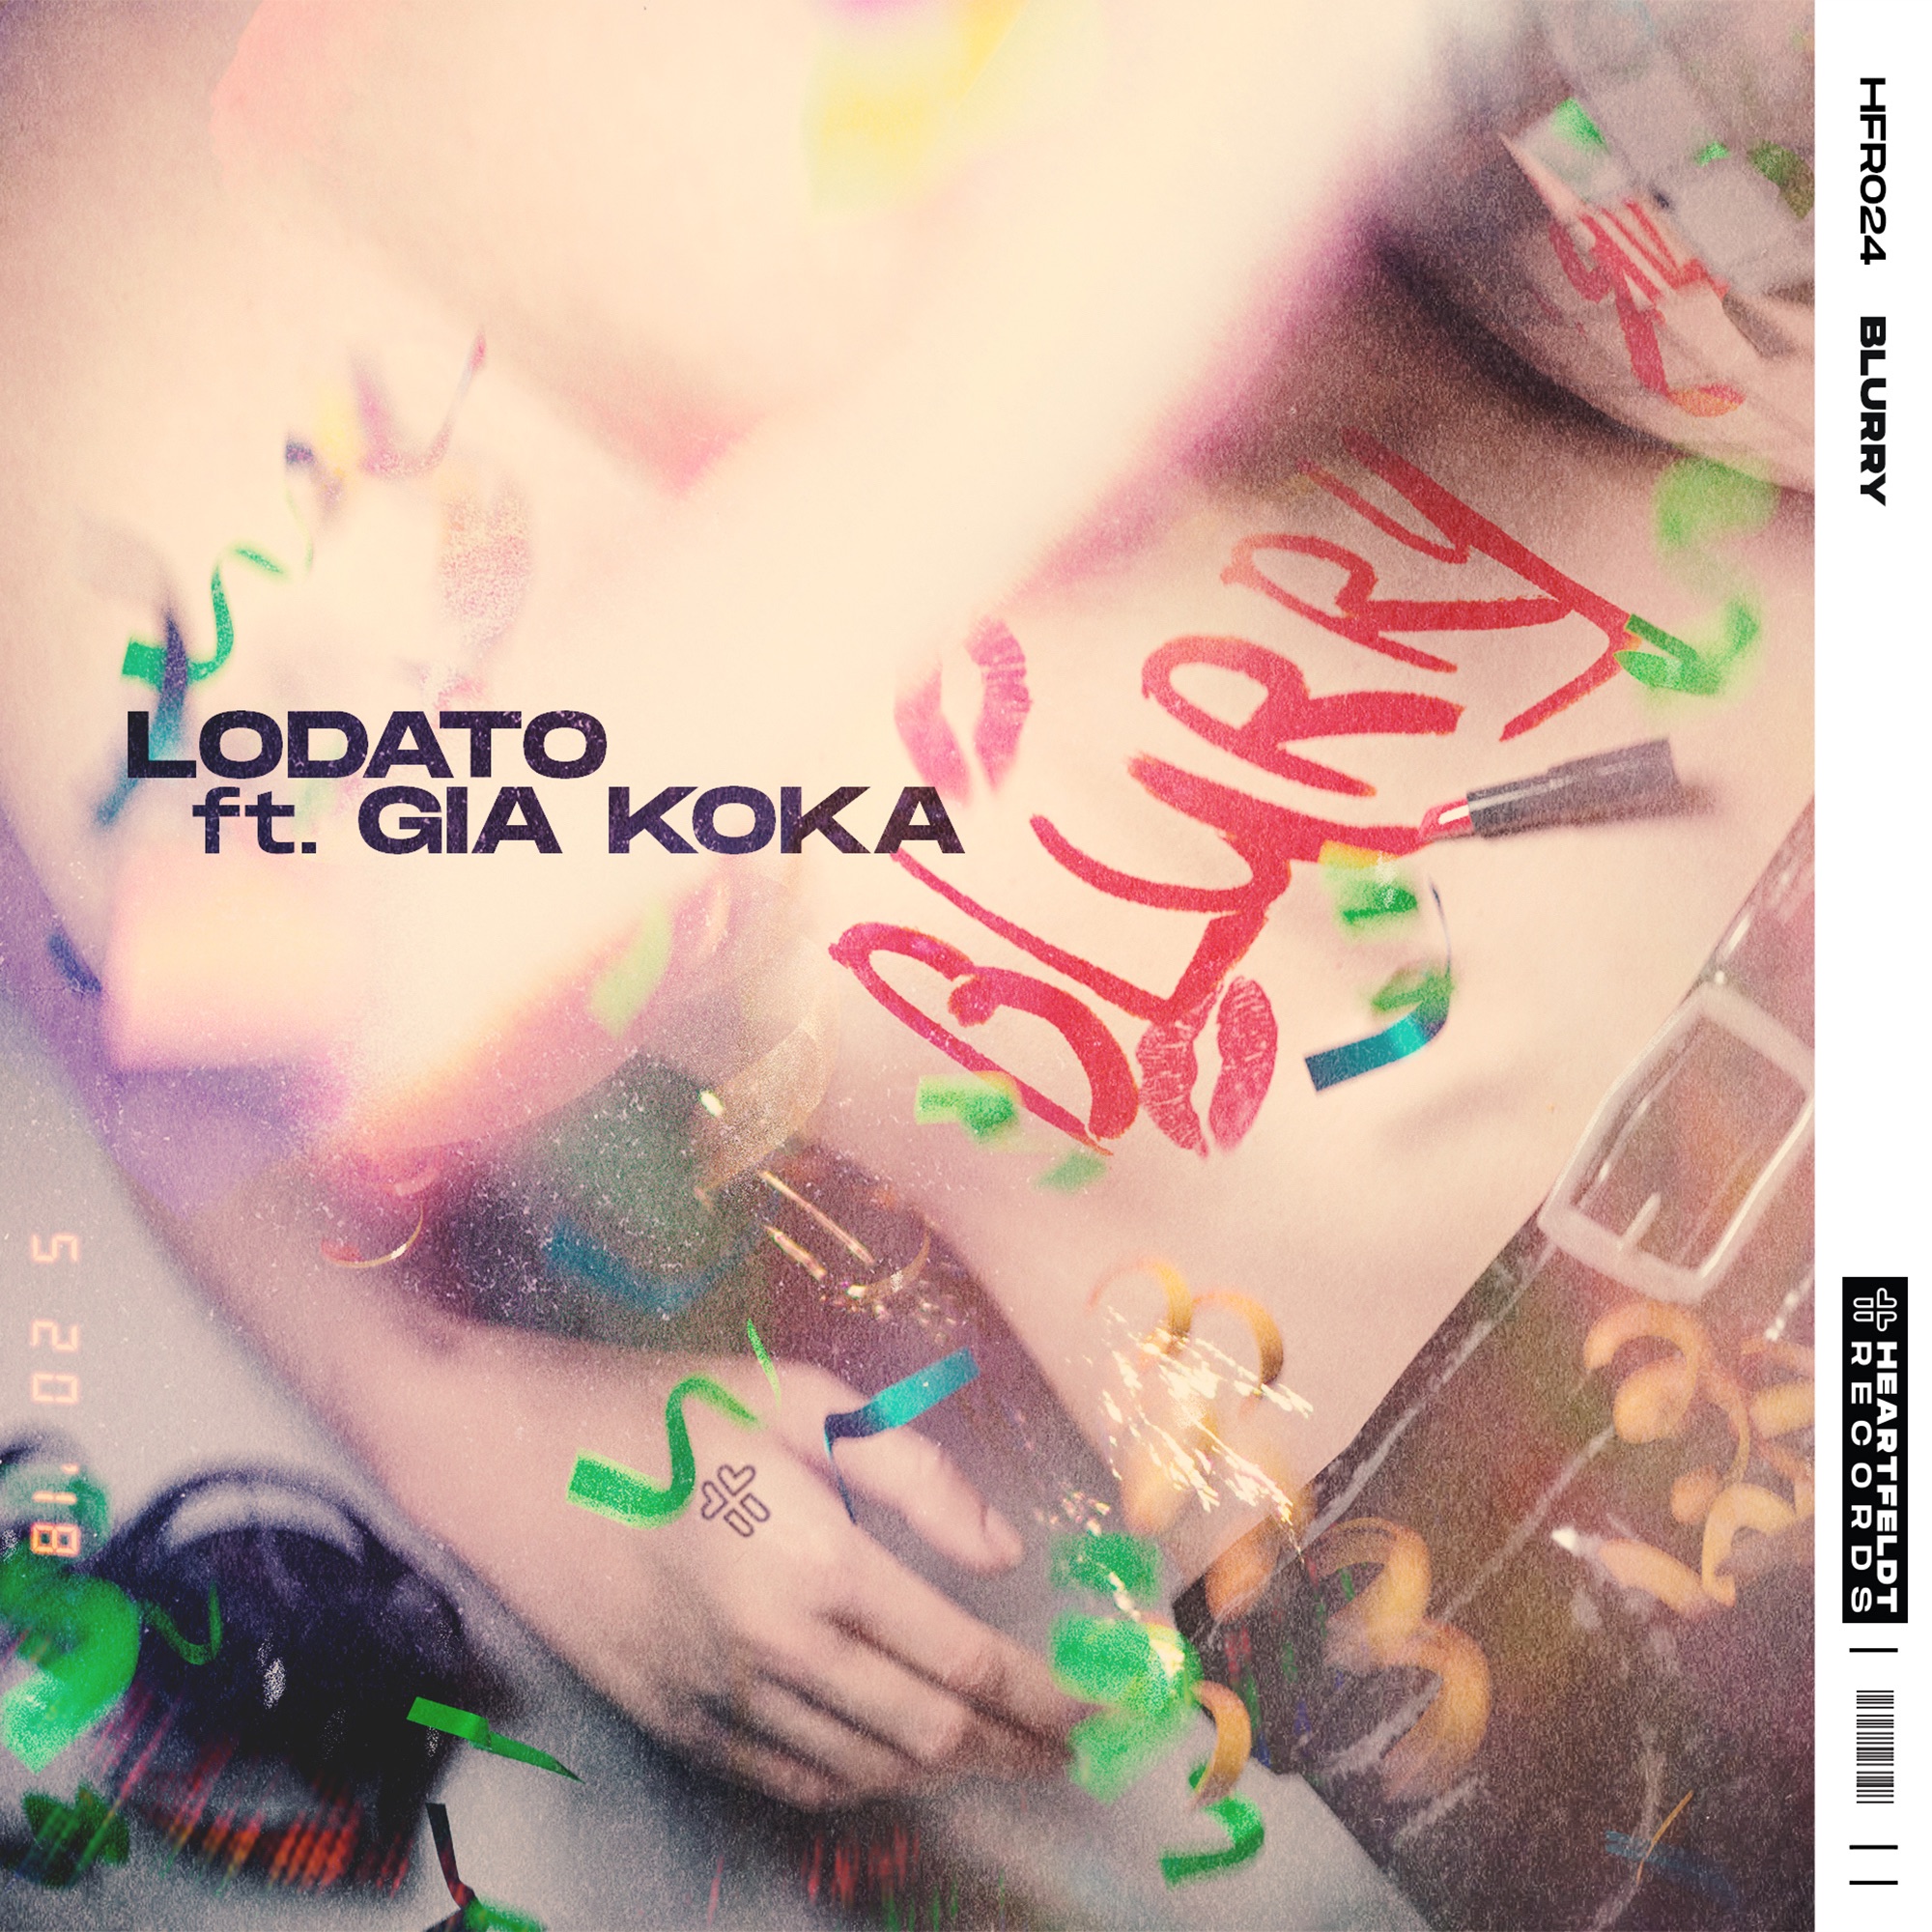 Lodato - Blurry (feat. Gia Koka) - Single